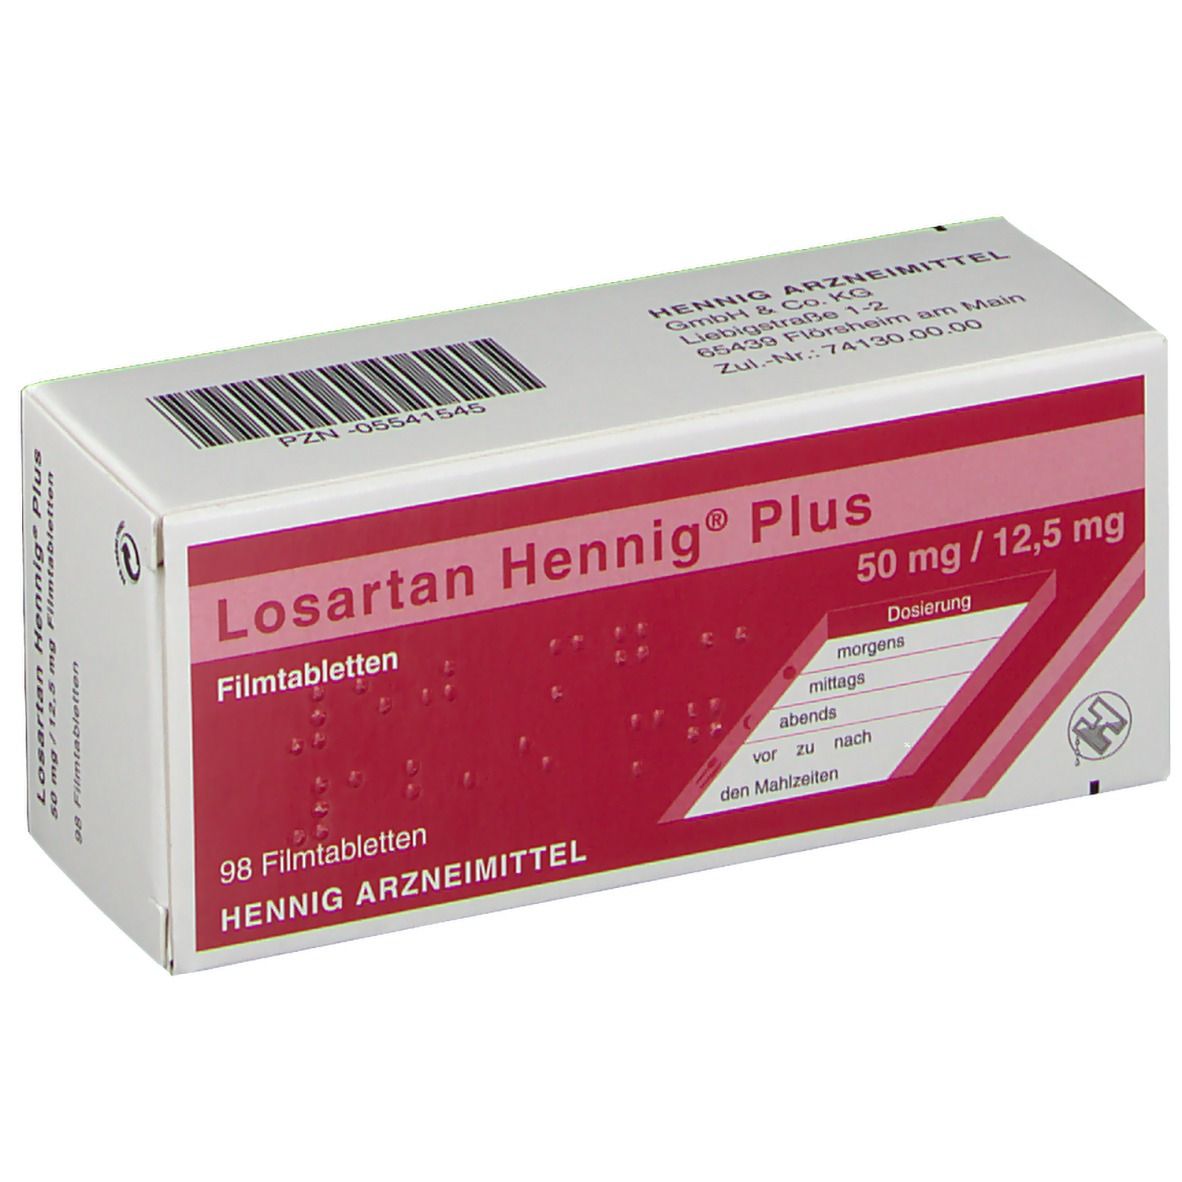 Losartan Hennig® Plus 50 mg/12,5 mg